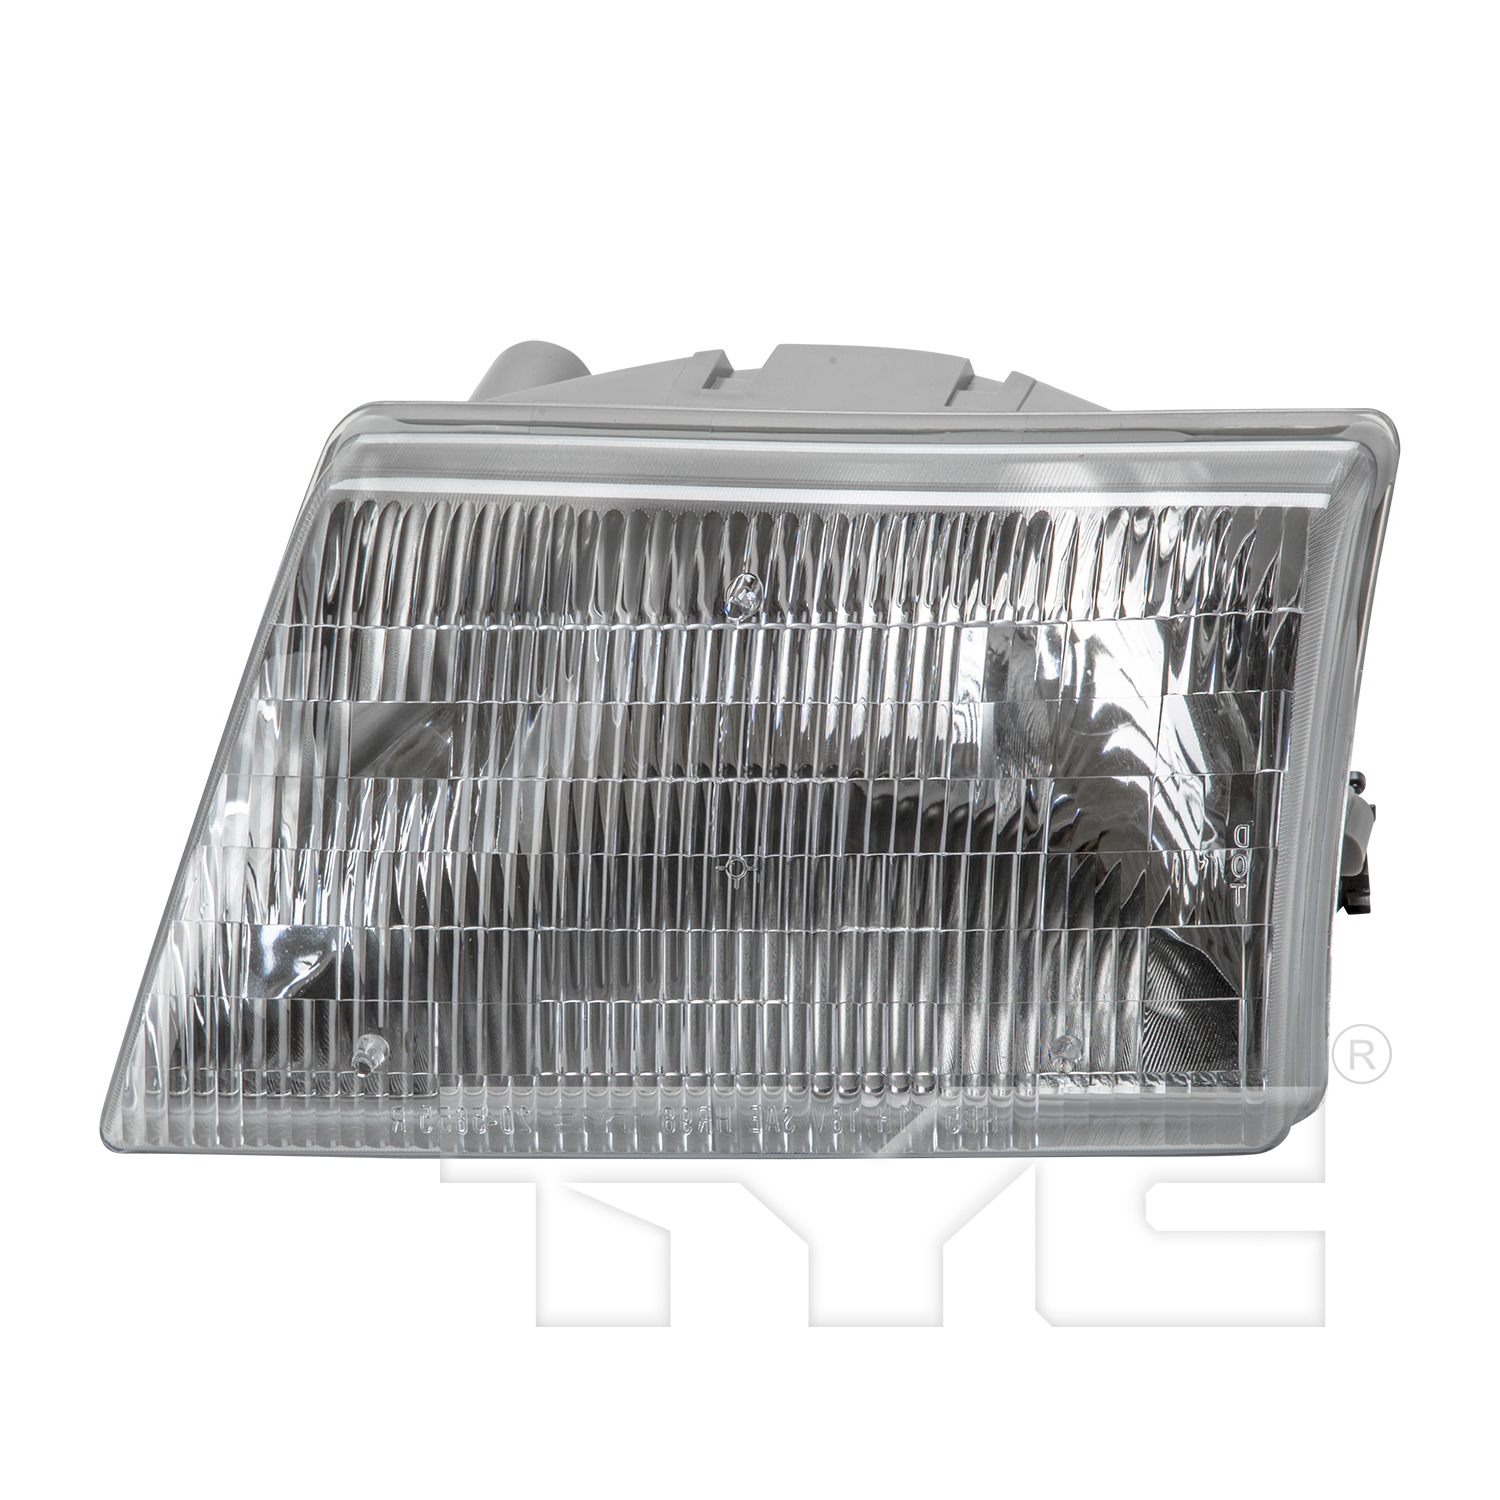 Aftermarket HEADLIGHTS for MAZDA - B4000, B4000,98-00,LT Headlamp assy composite